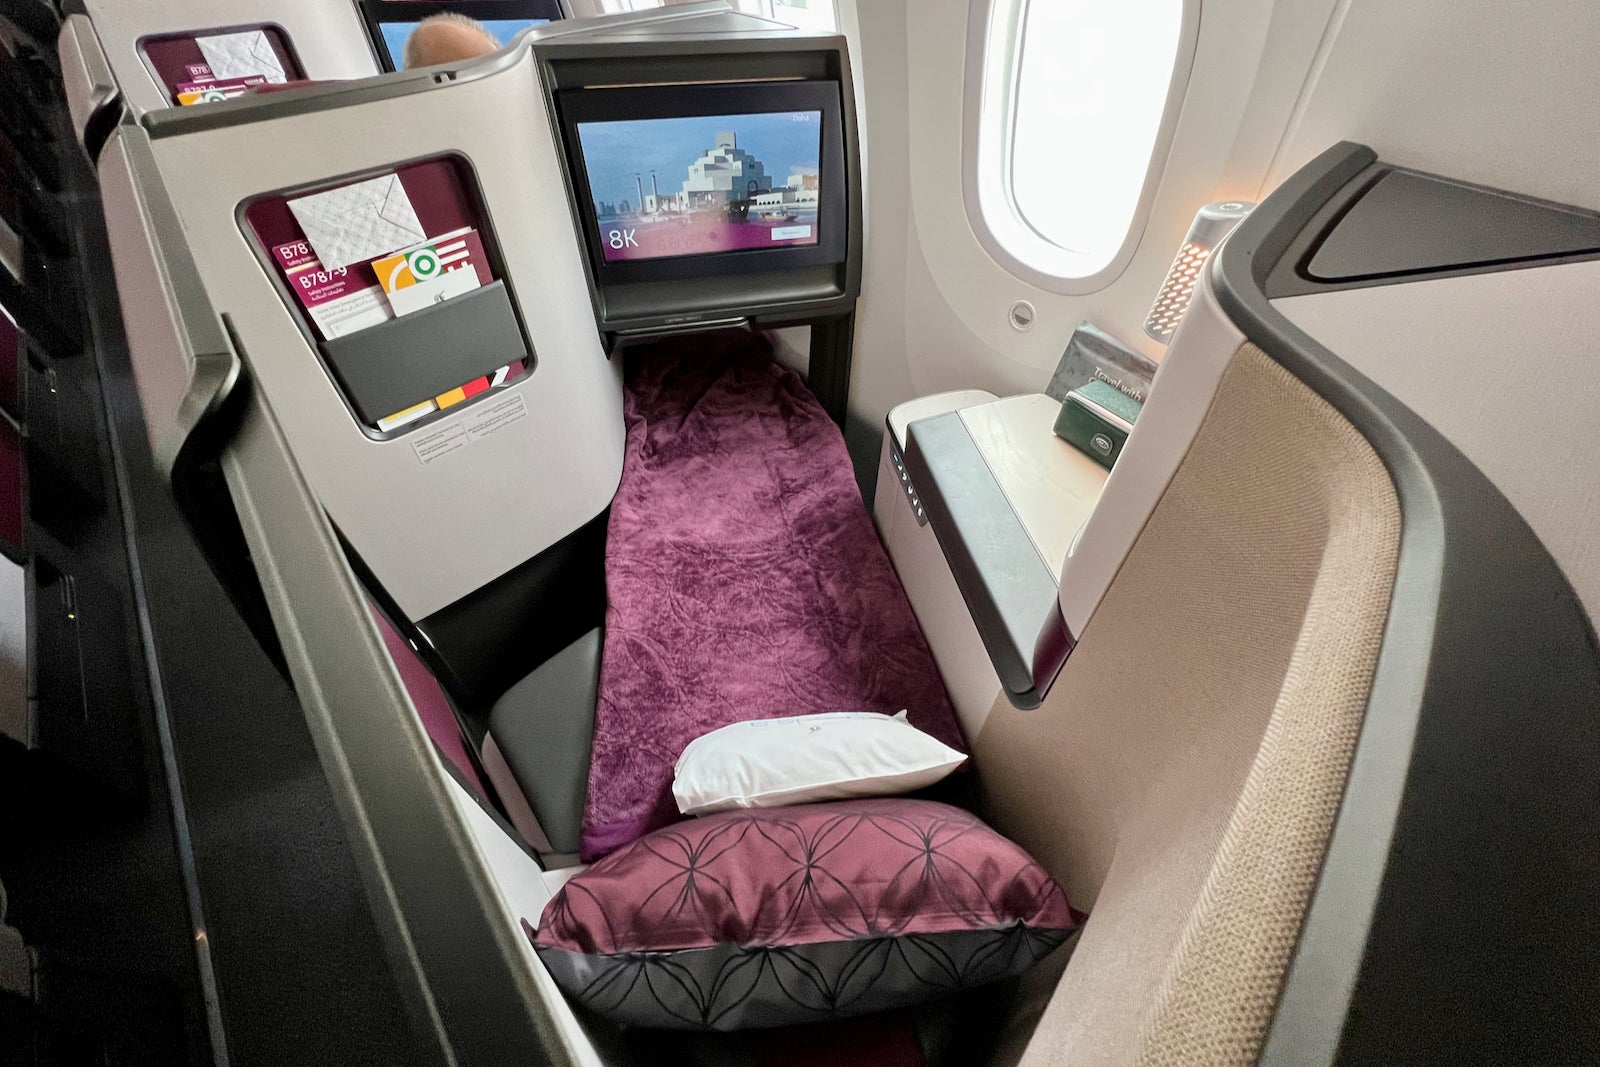 Qatar airways business class